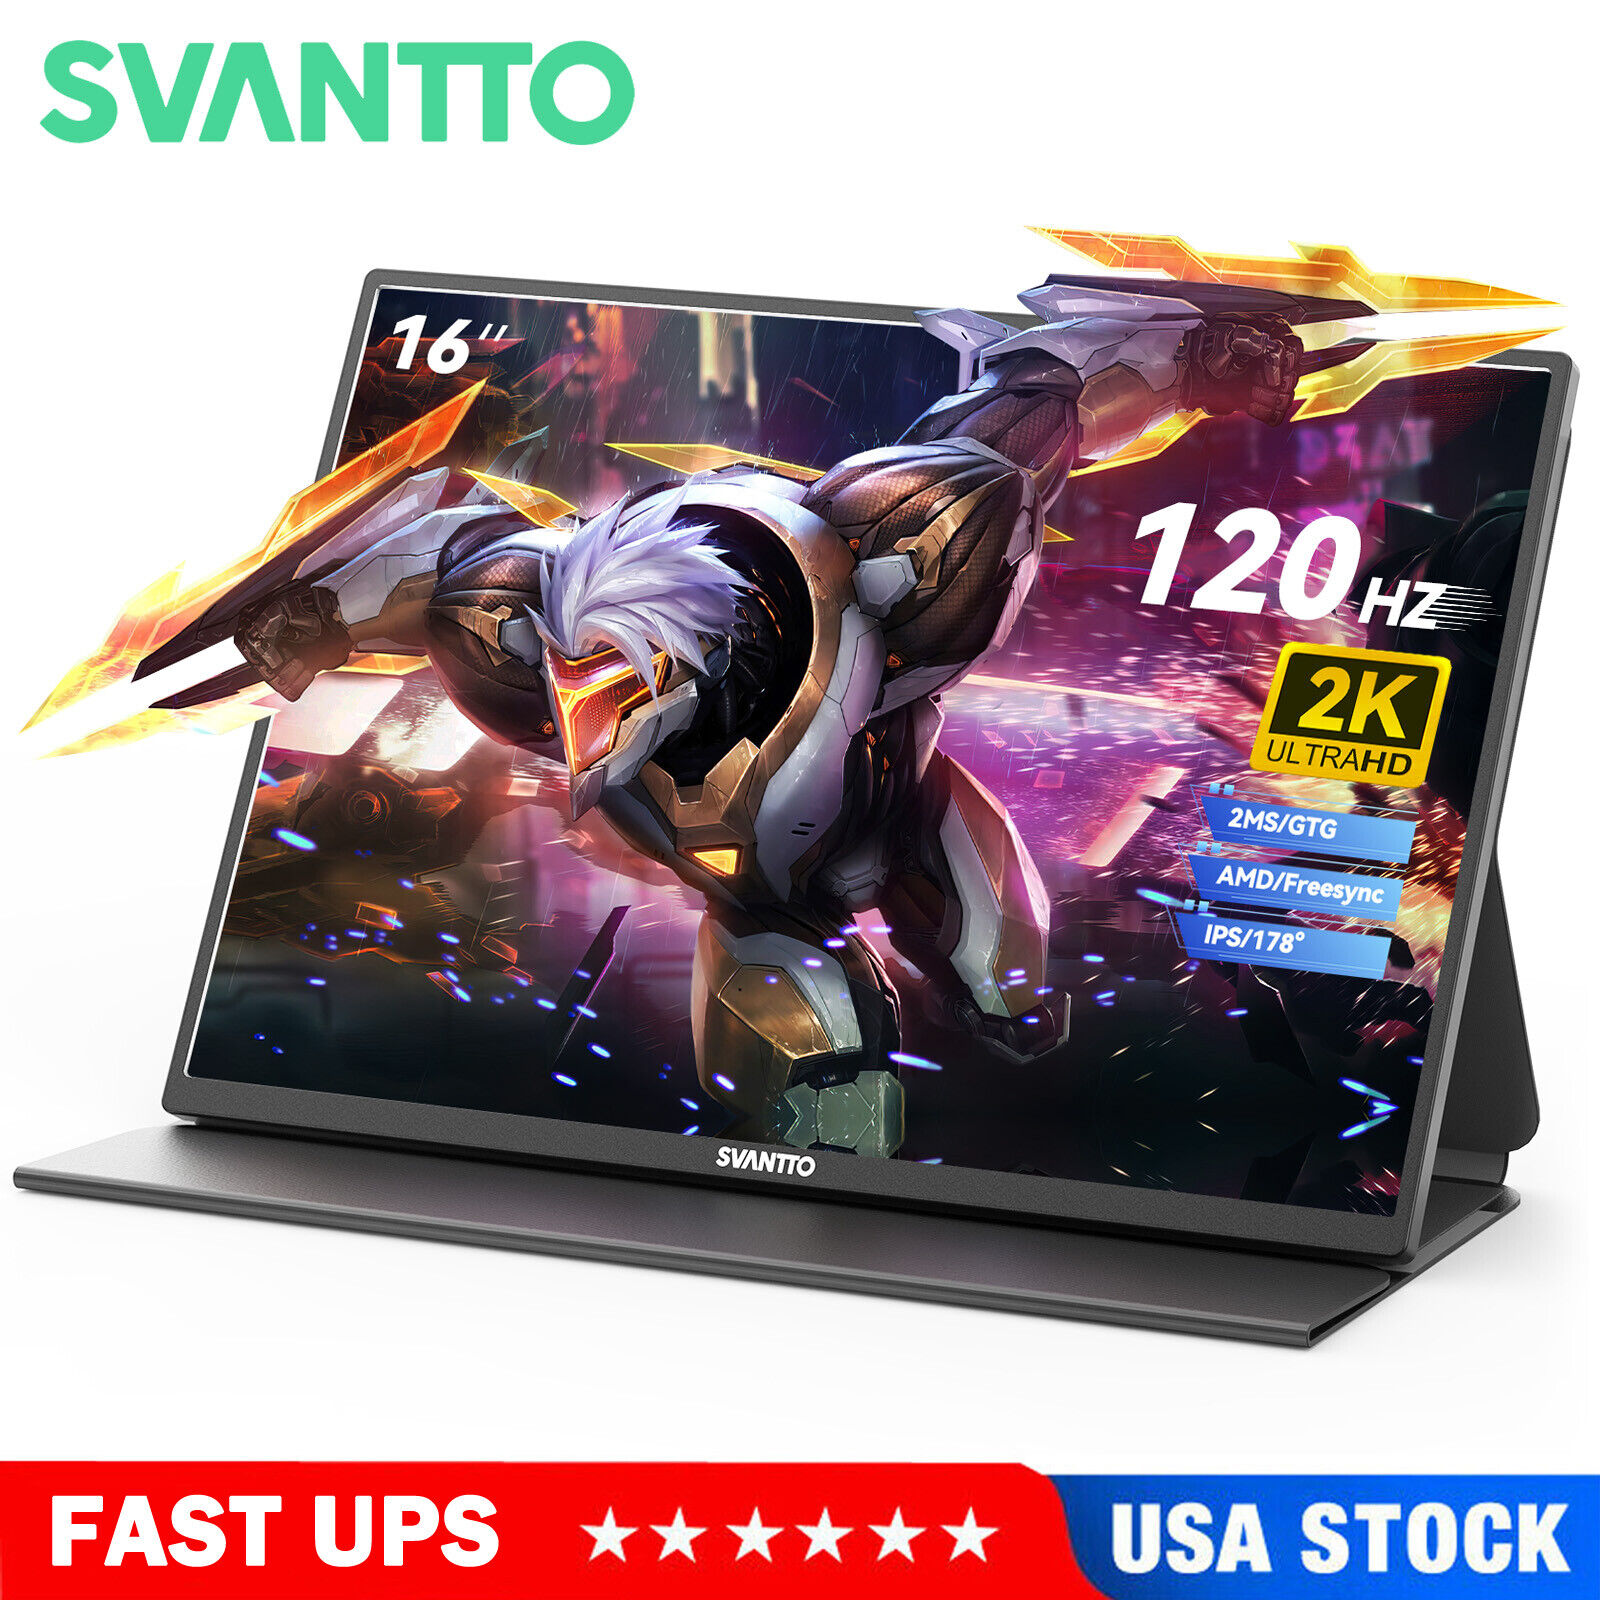 SVANTTO 16” 2K Portable Monitor 120Hz Type C VESA Gaming Monitor For Laptop PS